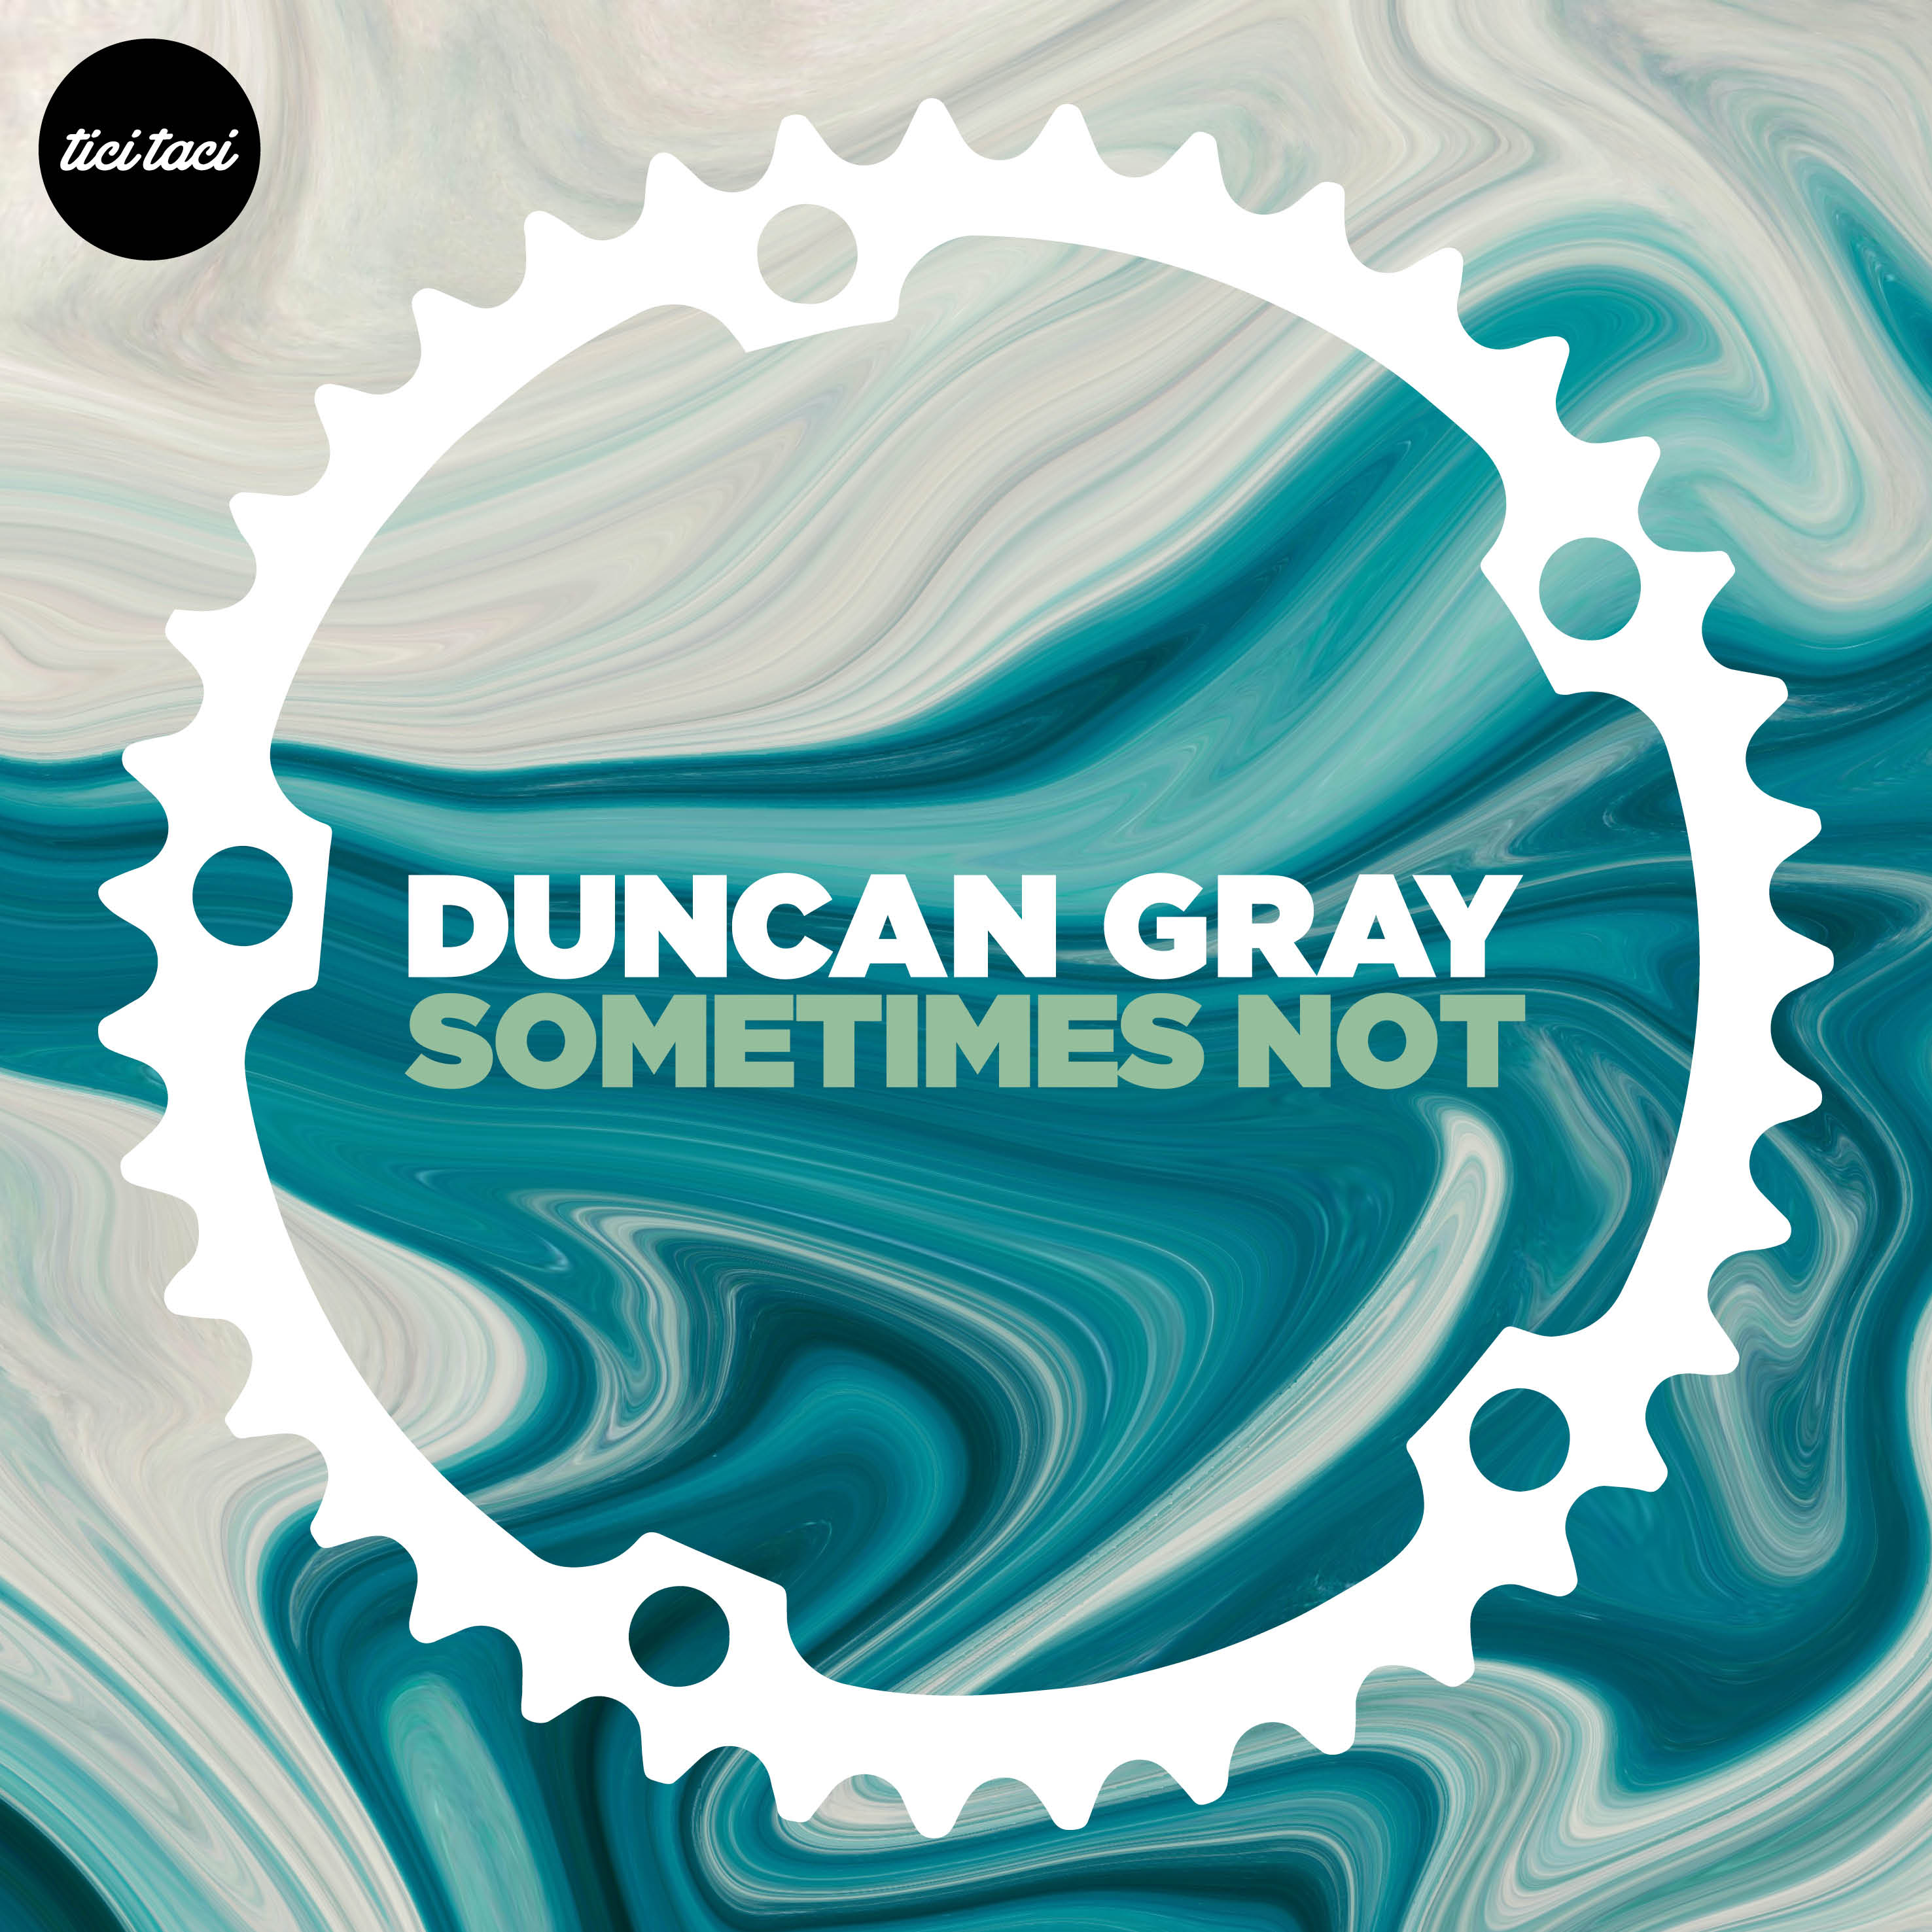 Duncan Gray - Sometimes Not [2020-07-03] (tici taci)